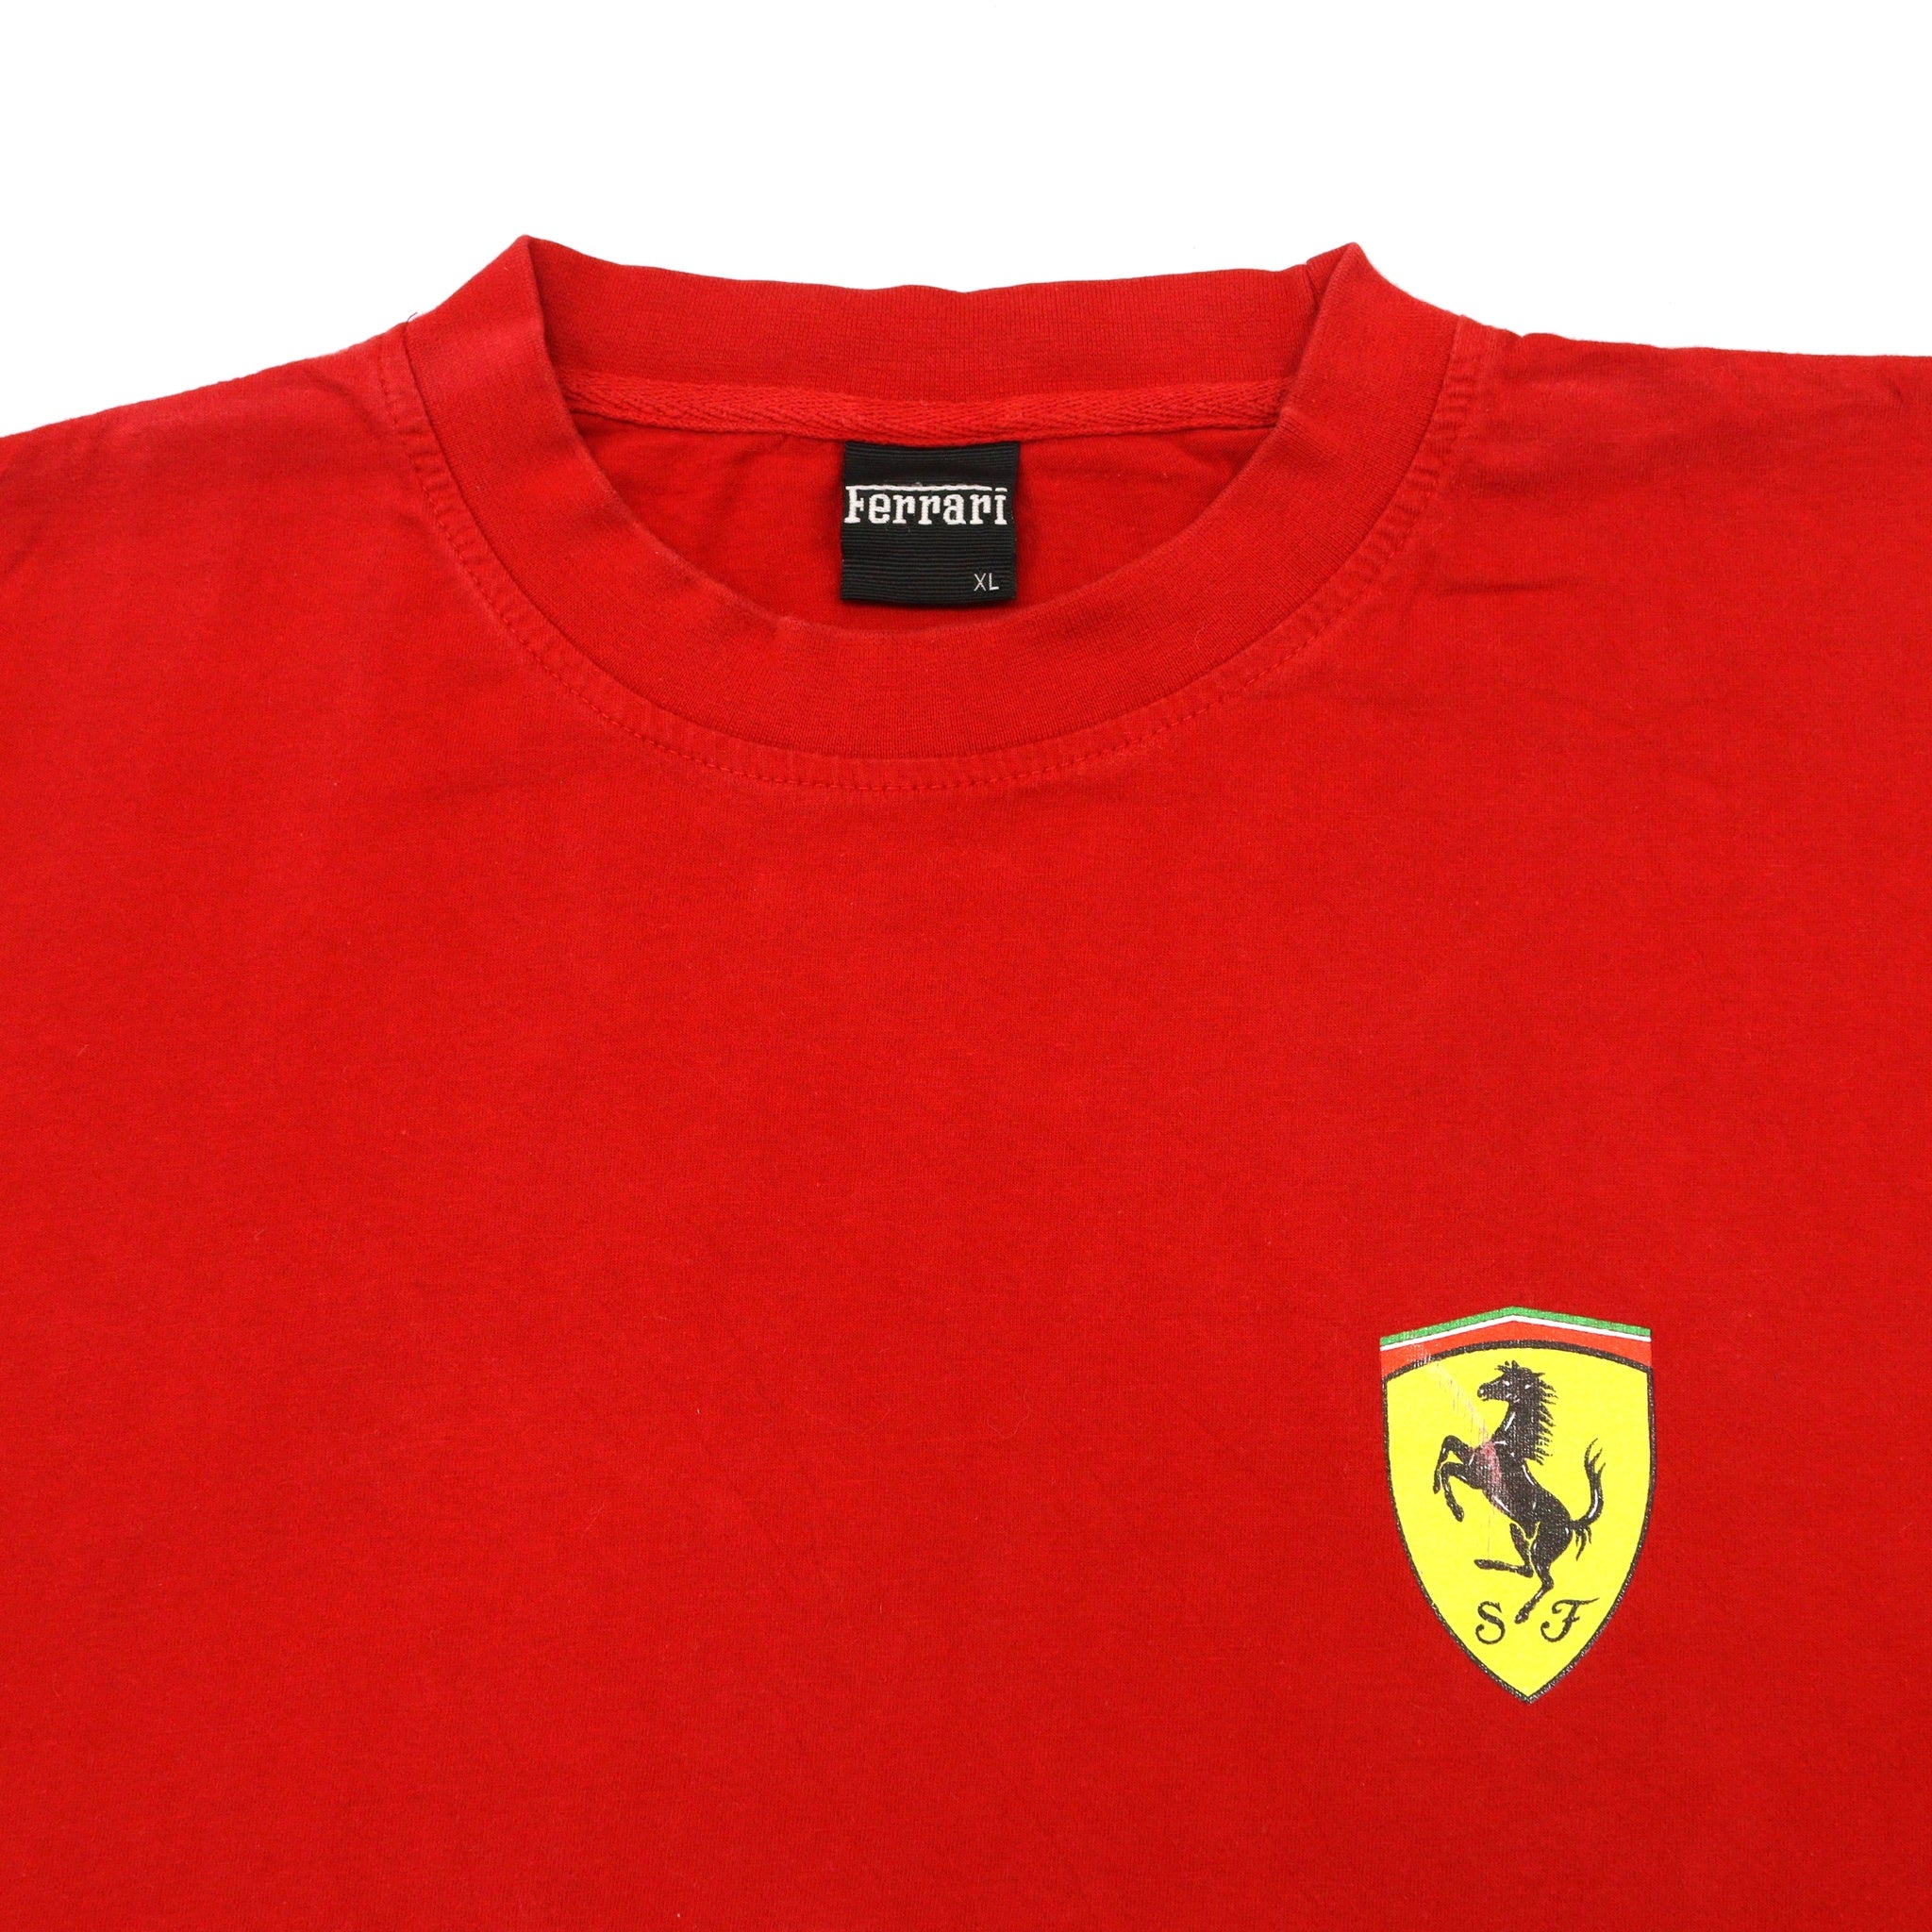 Vintage Ferrari Red T-shirt